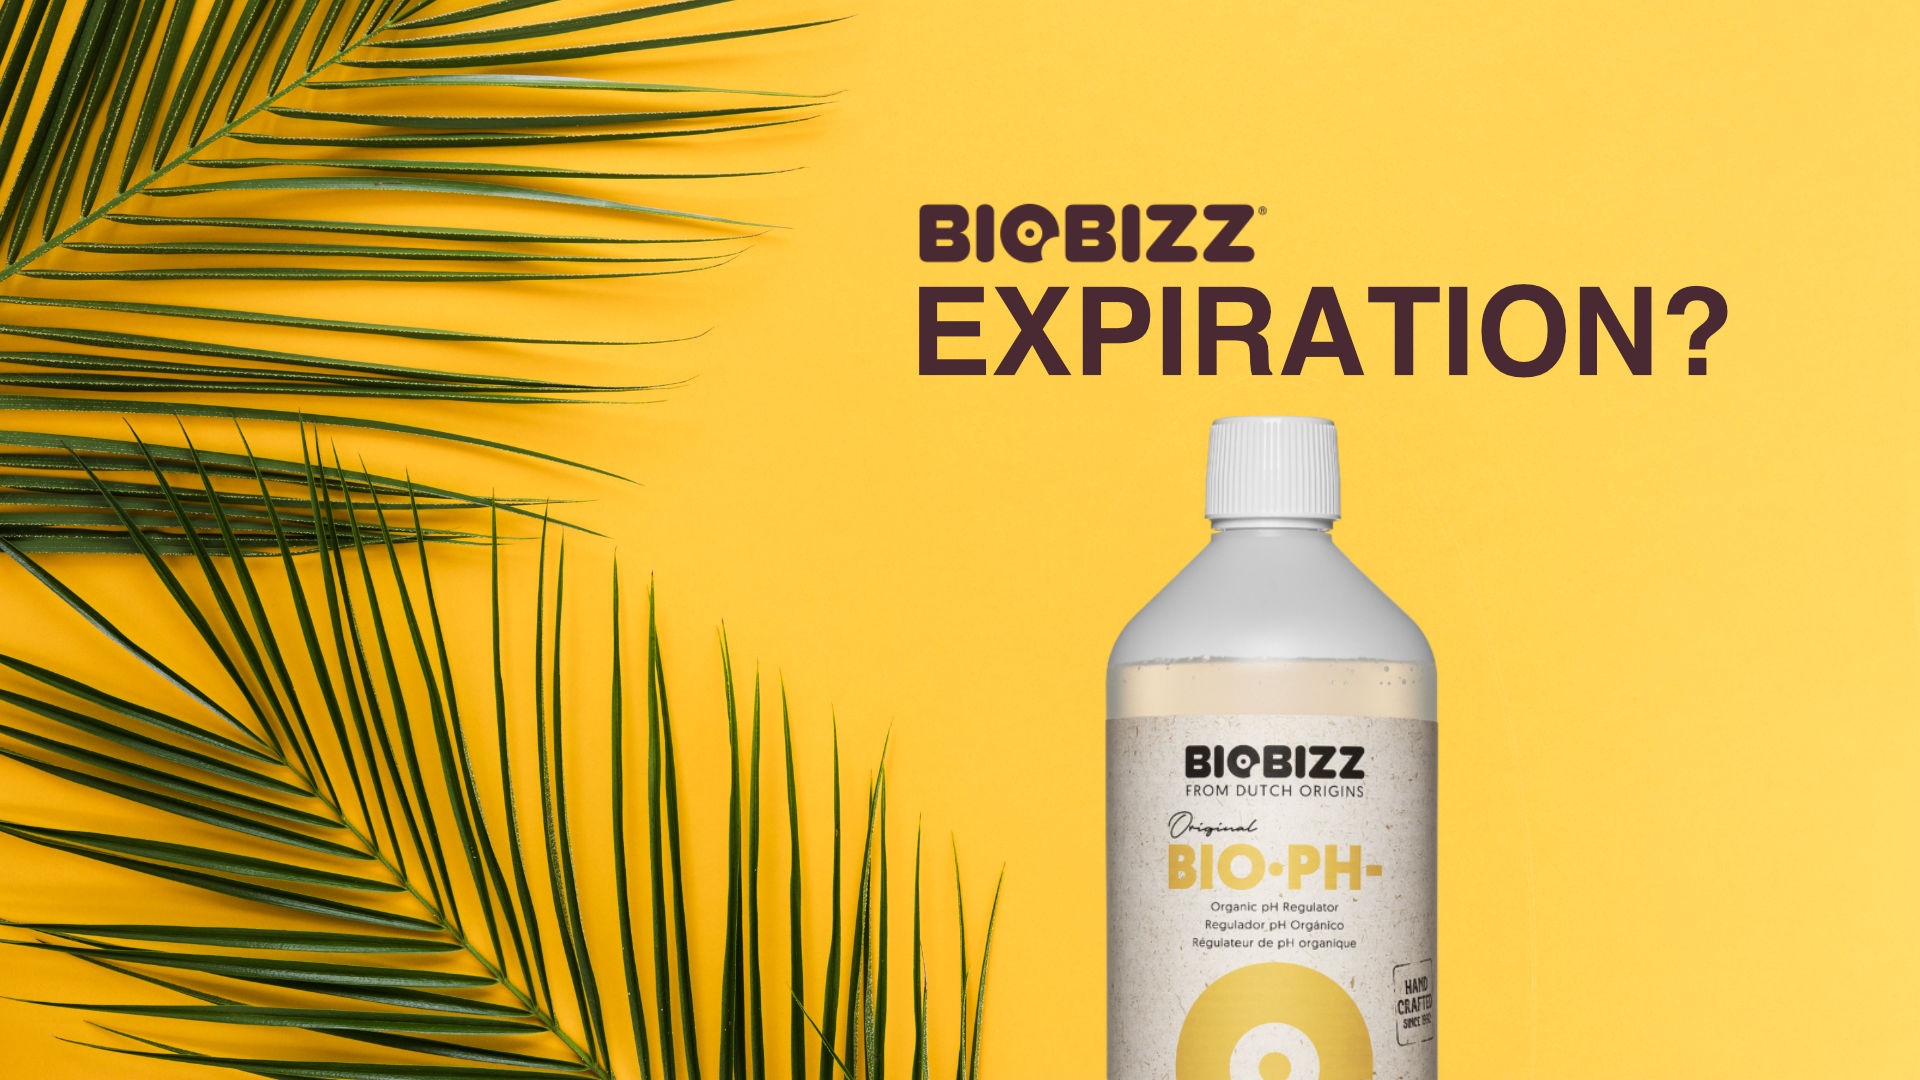 Biobizz Instructions - Production and Expiration Dates